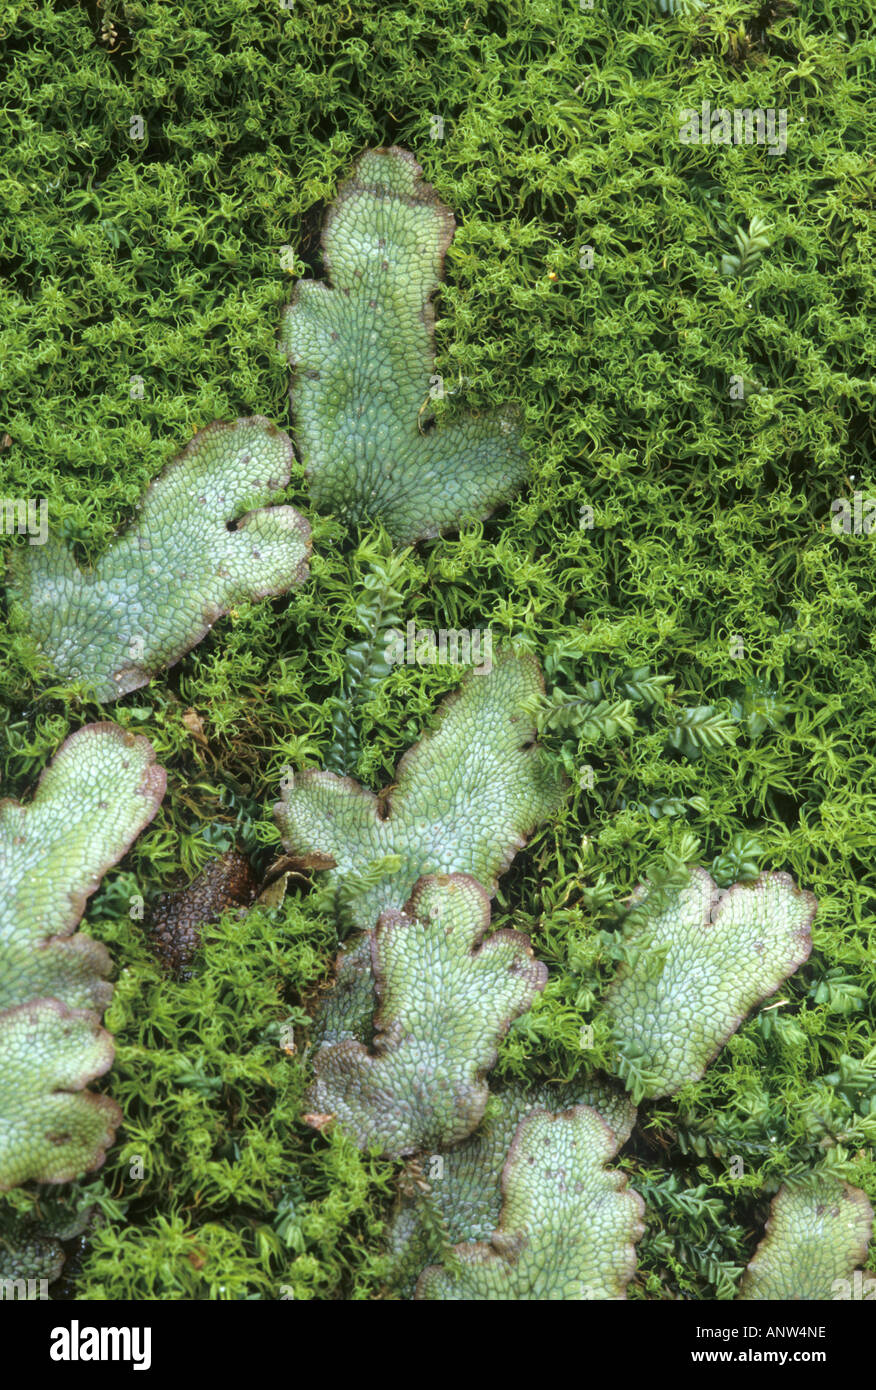 Liverworts on moss, Riccia fluitans Stock Photo